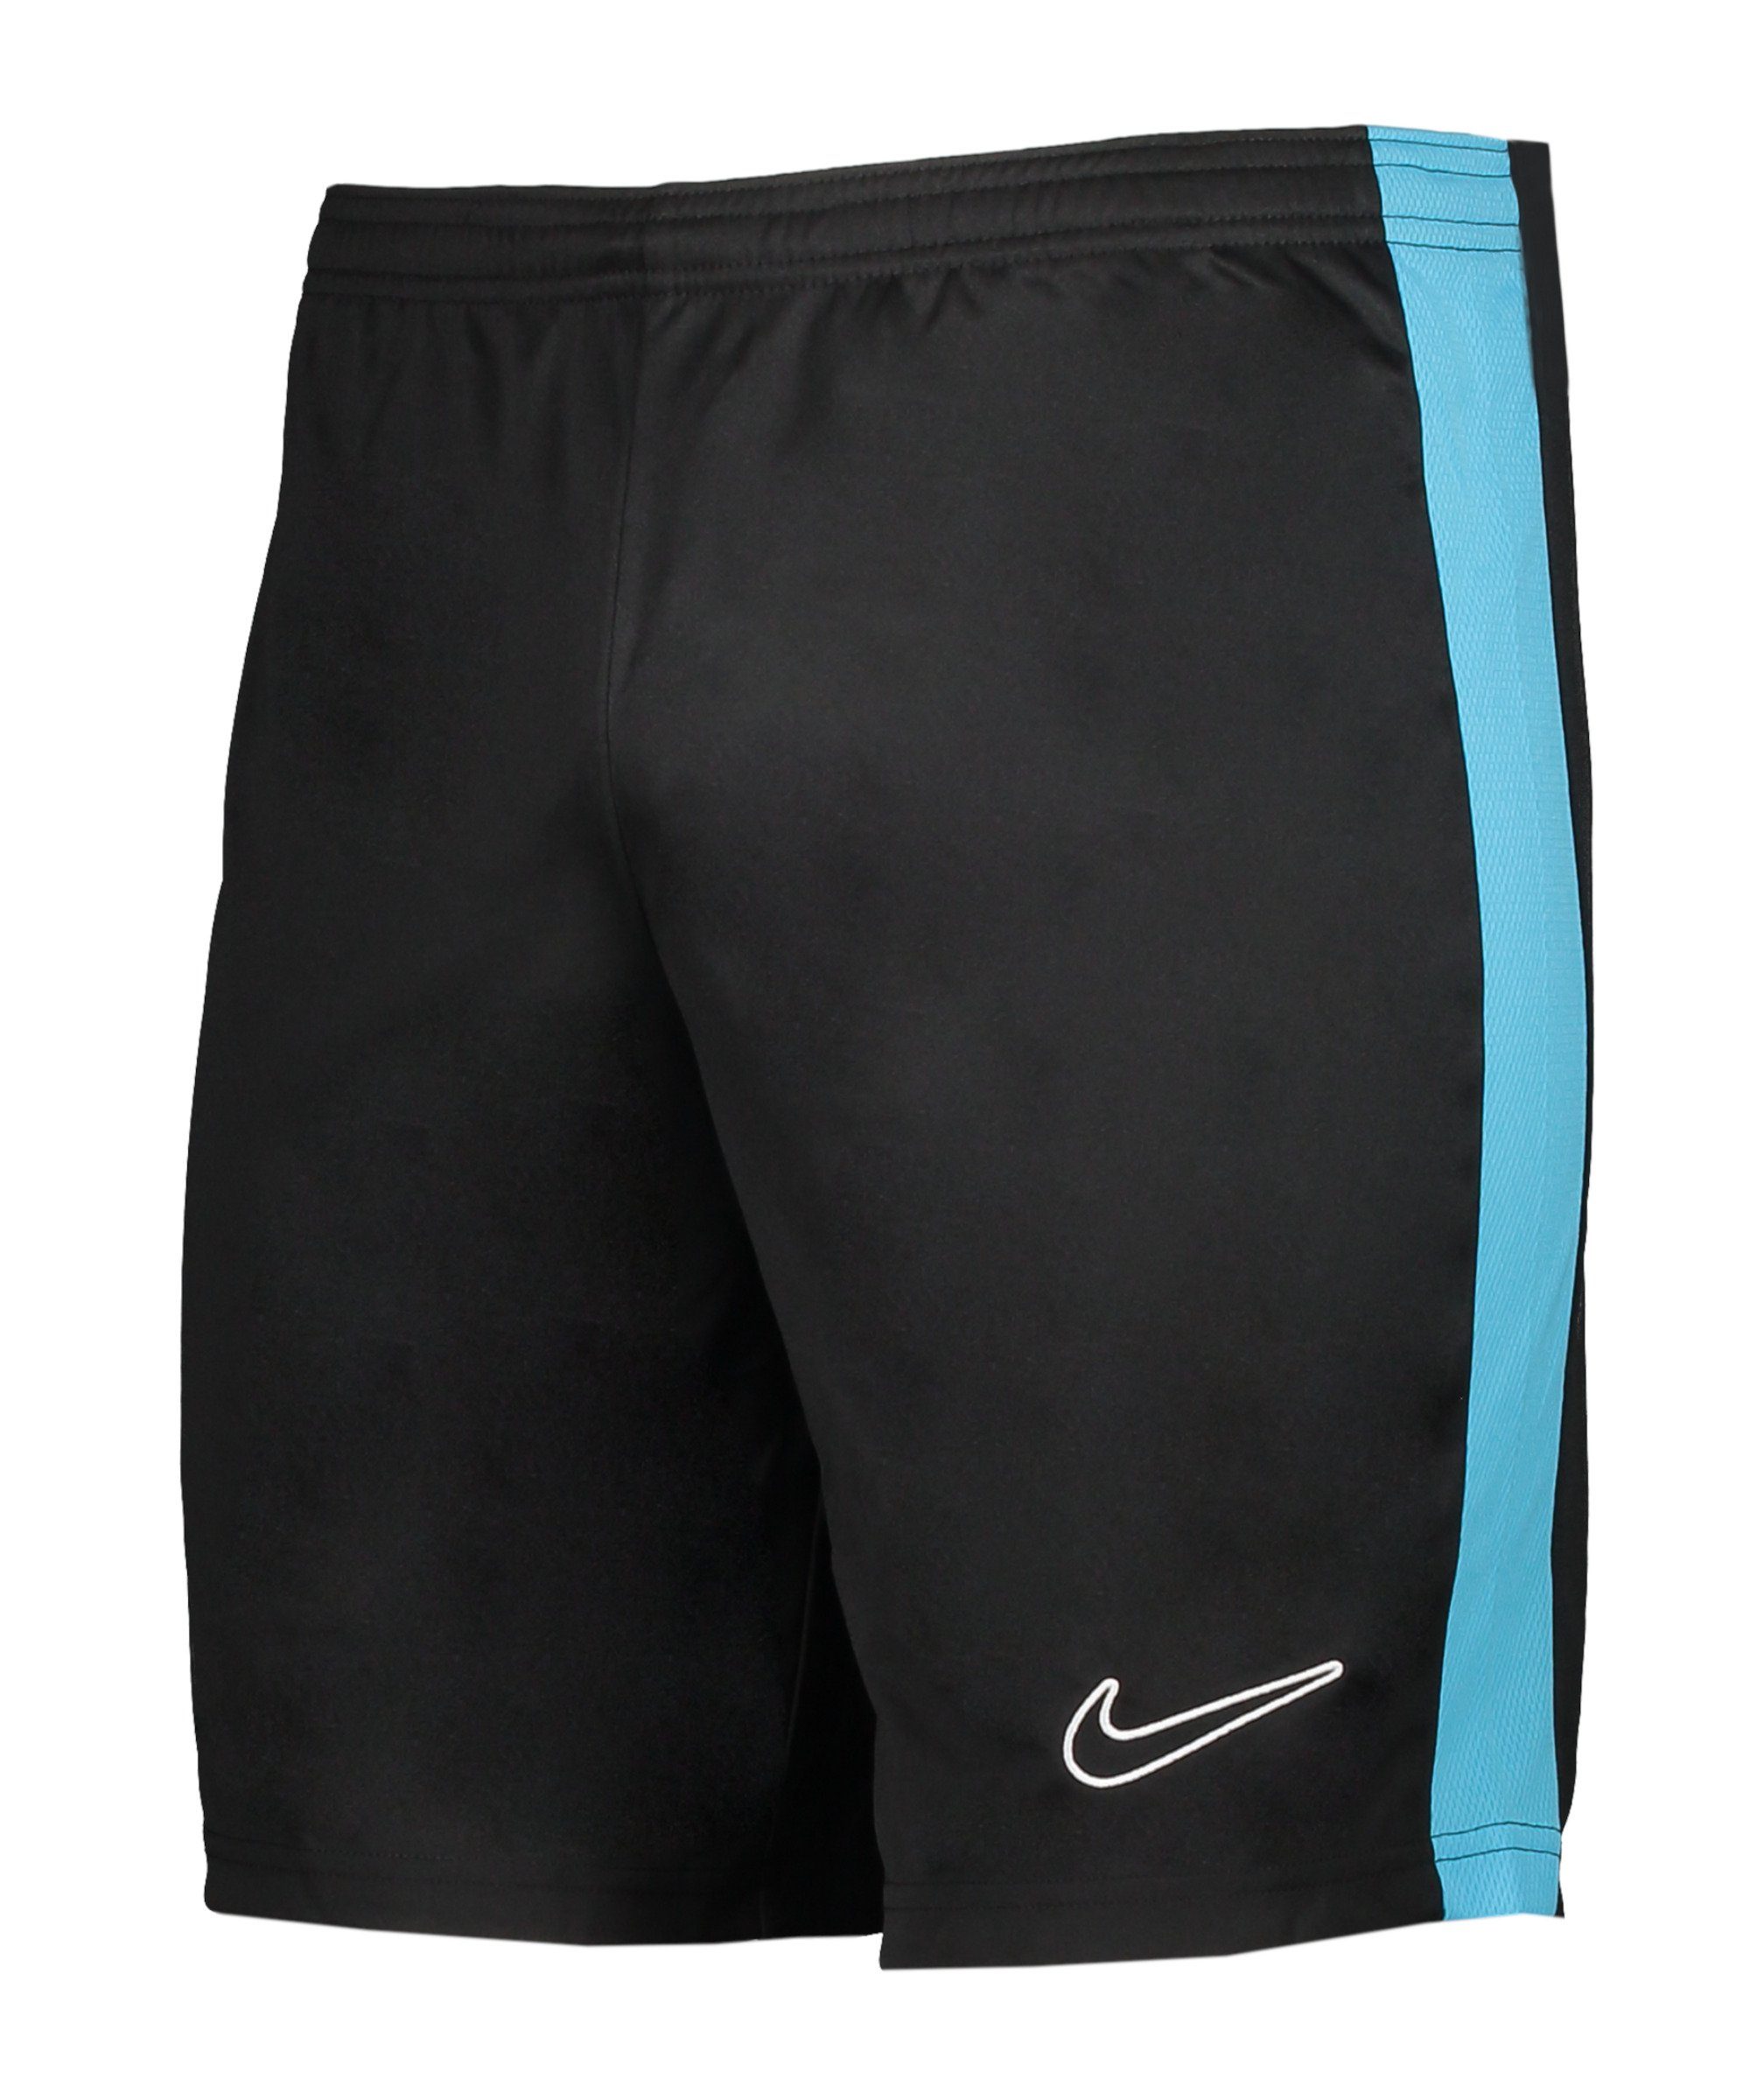 Academy Sporthose schwarz Nike Short